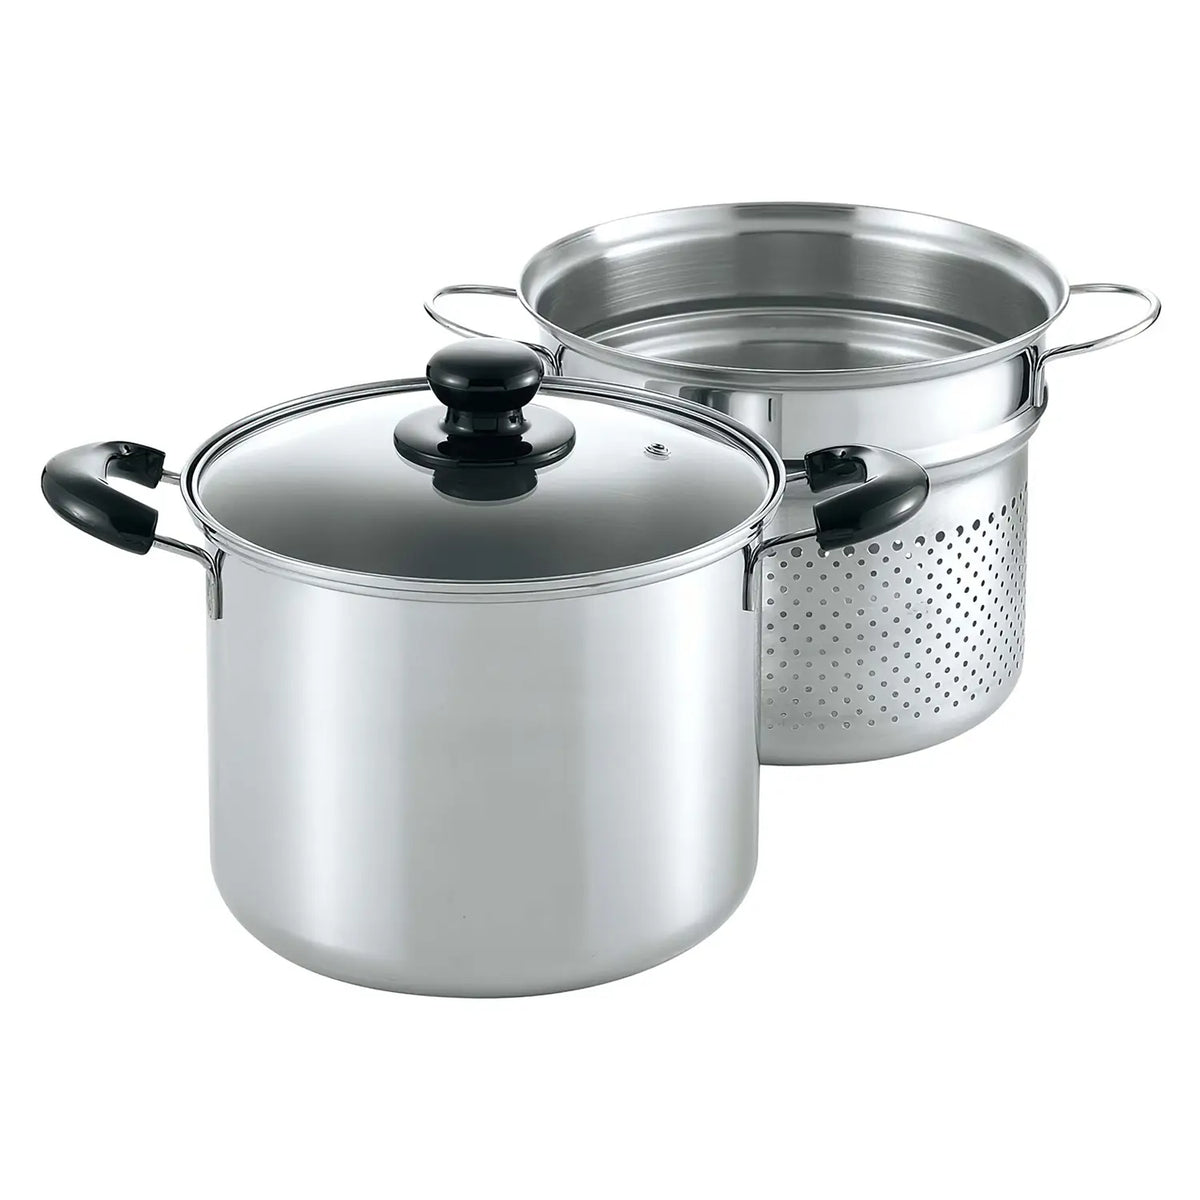 Yoshikawa Cook Look II 3-Ply Stainless Steel Pasta Pot